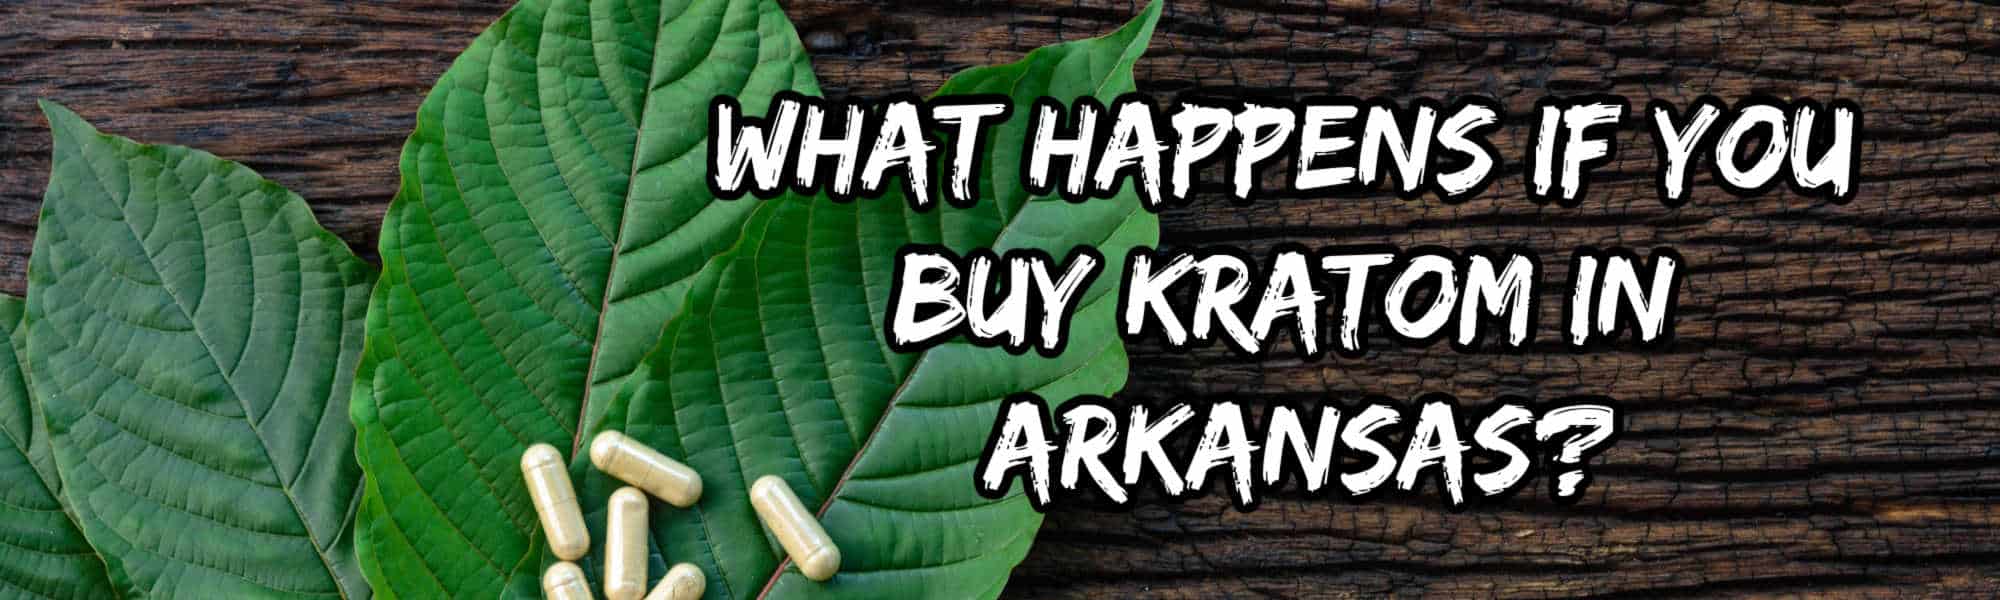 image of what happens if you buy kratom in arkansas